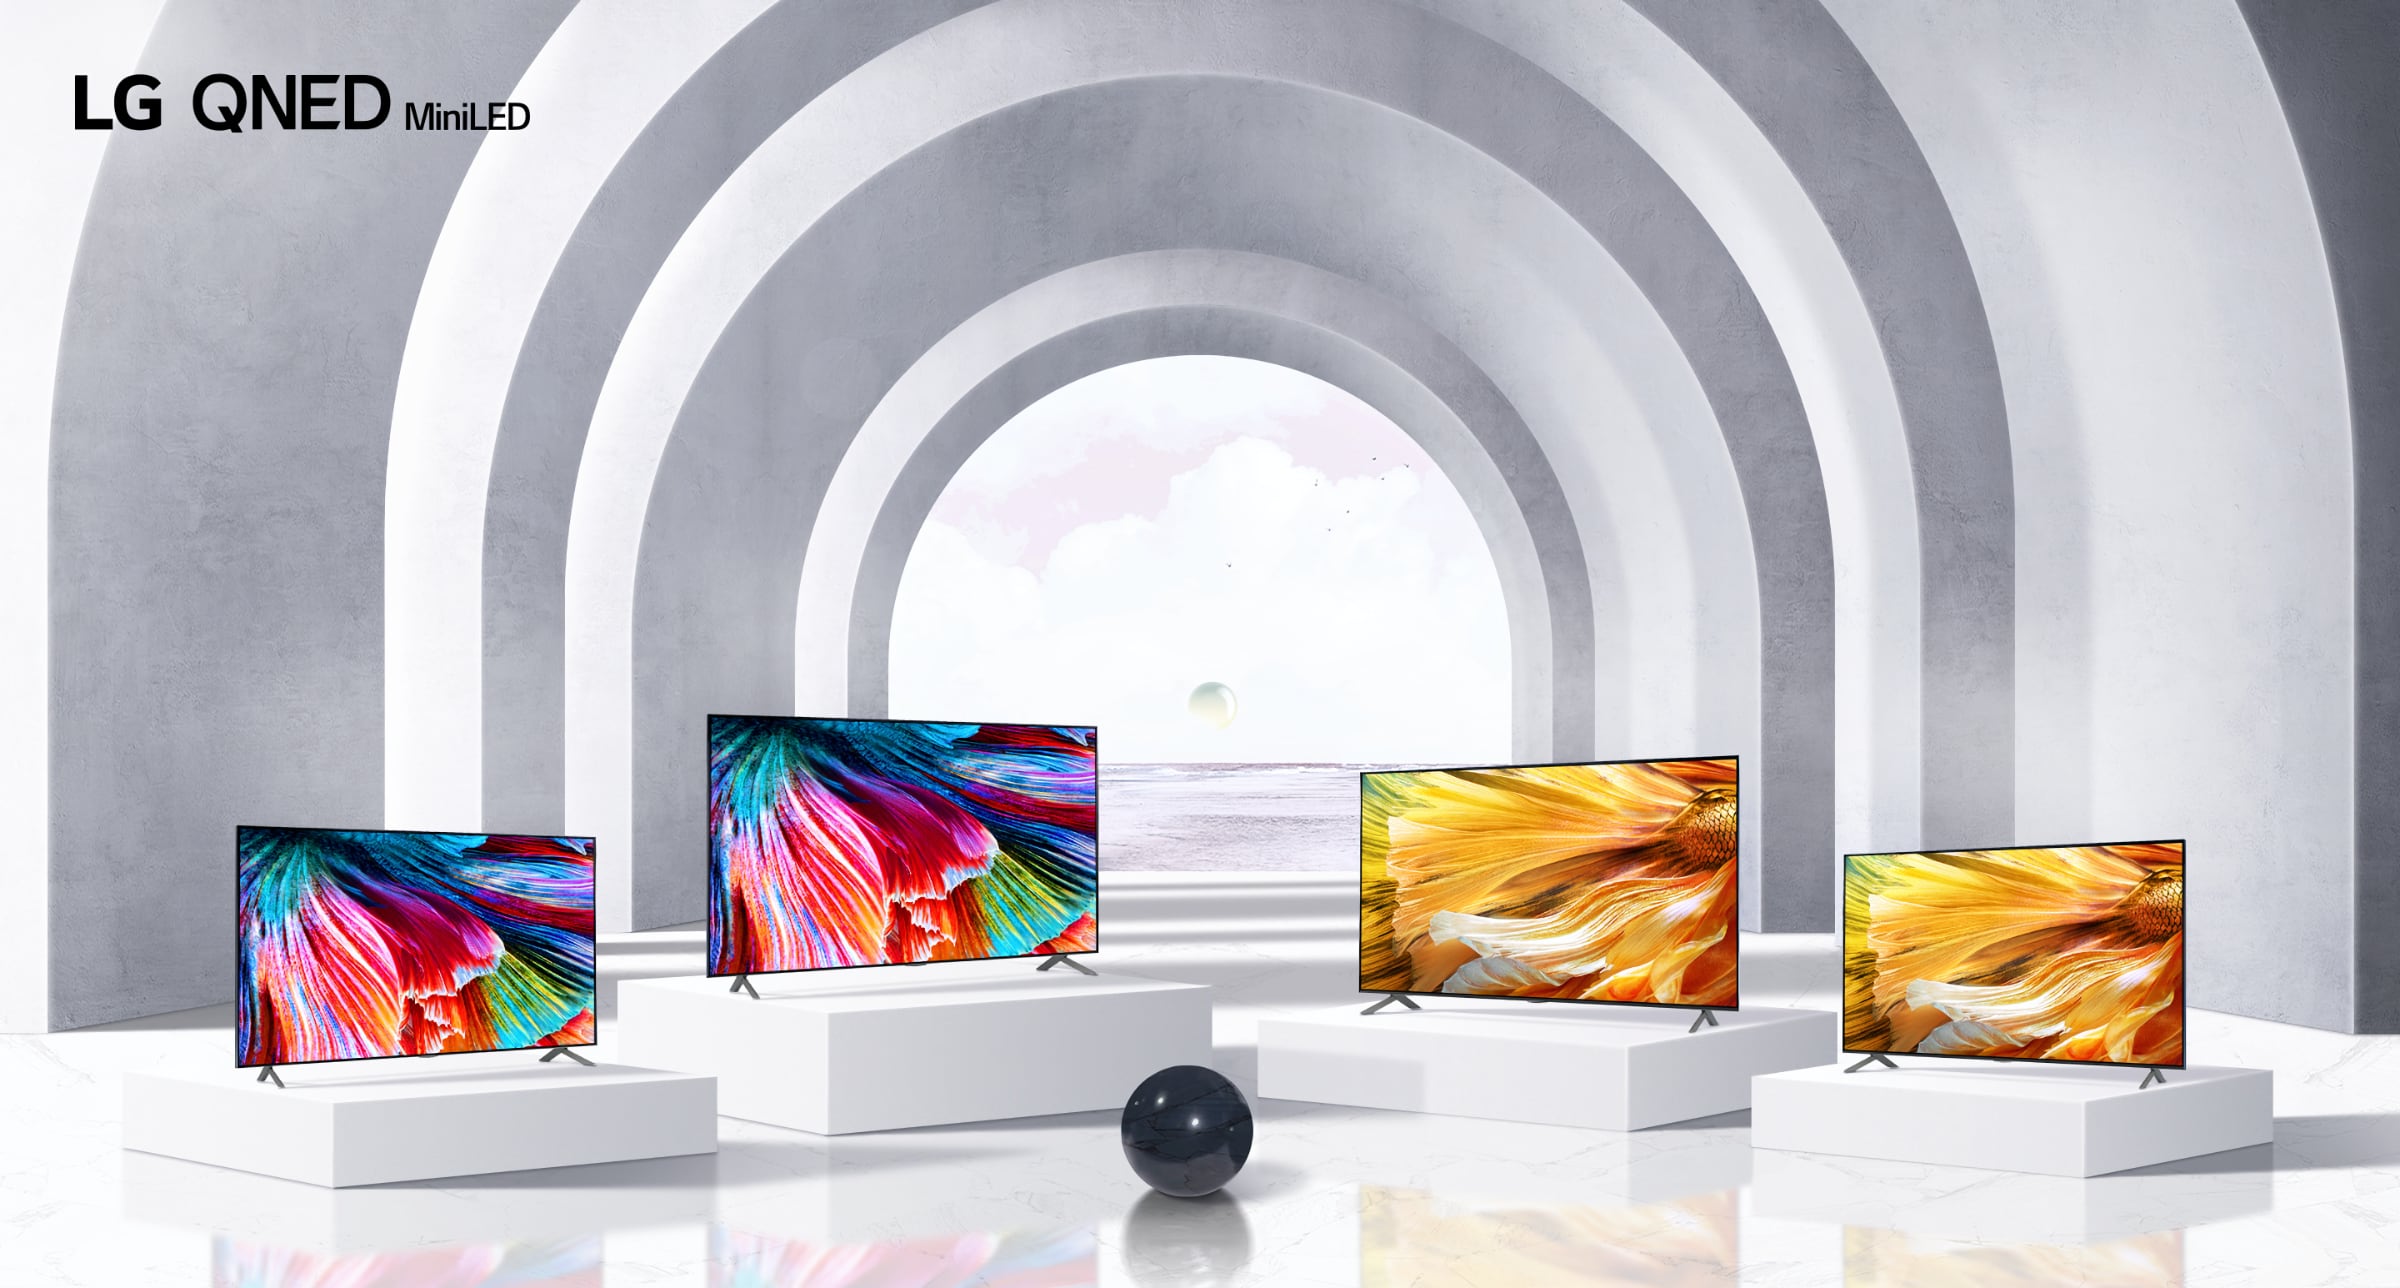 Grand stabil marmelade LG announces 8K & 4K "QNED" LCD TVs with HDMI 2.1, webOS 6.0 - FlatpanelsHD